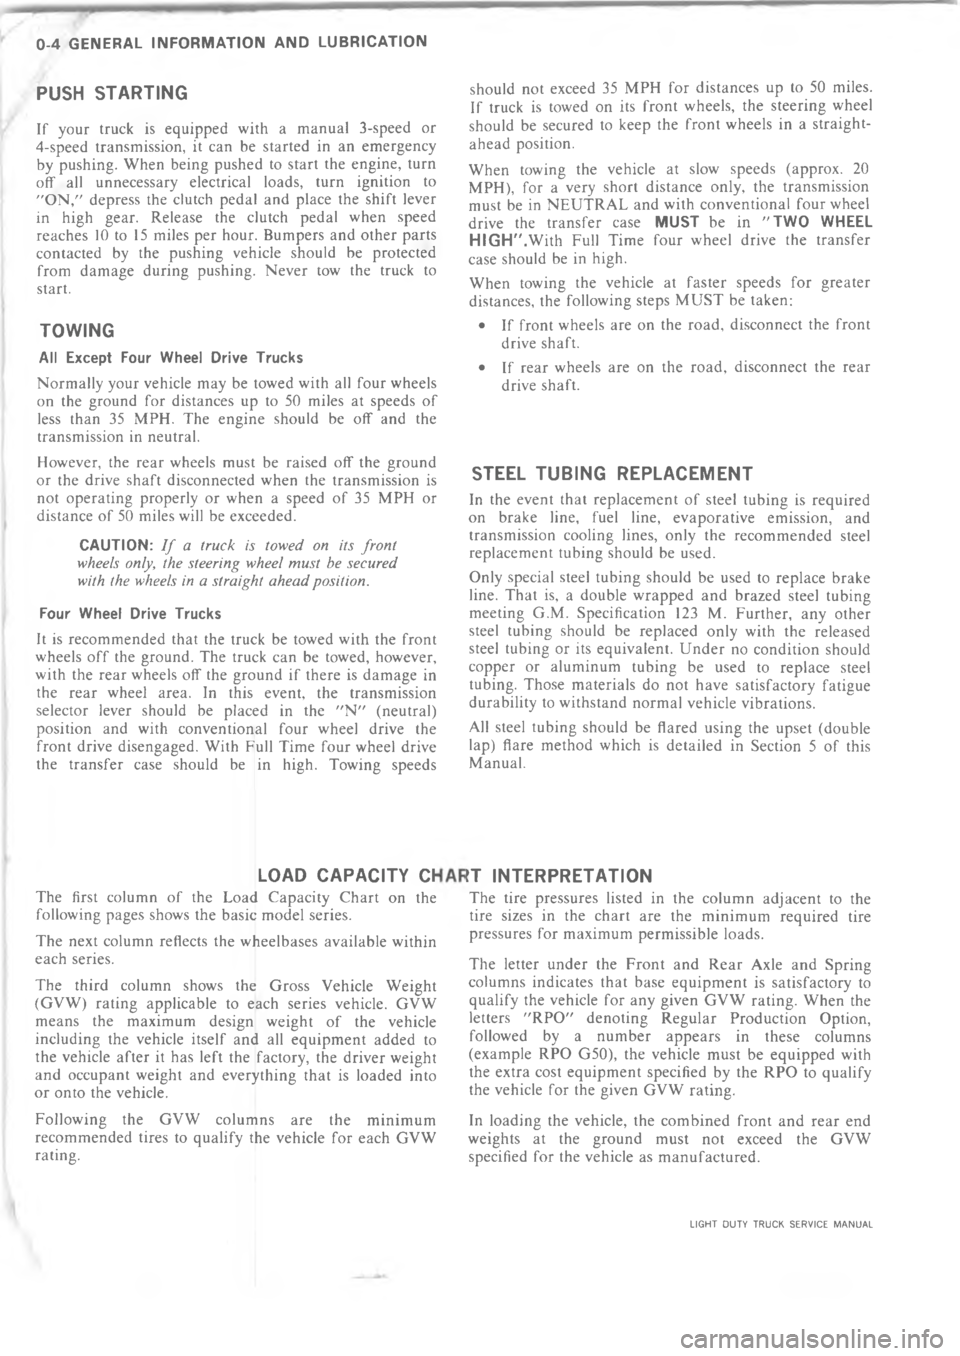 CHEVROLET LIGHT DUTY TRUCK 1973  Service Manual  A              	 
	
/


H




!

&&
+

!!

A



,


# 
	
.
.

!




"

"

"
>





5

!
	
!

;


K